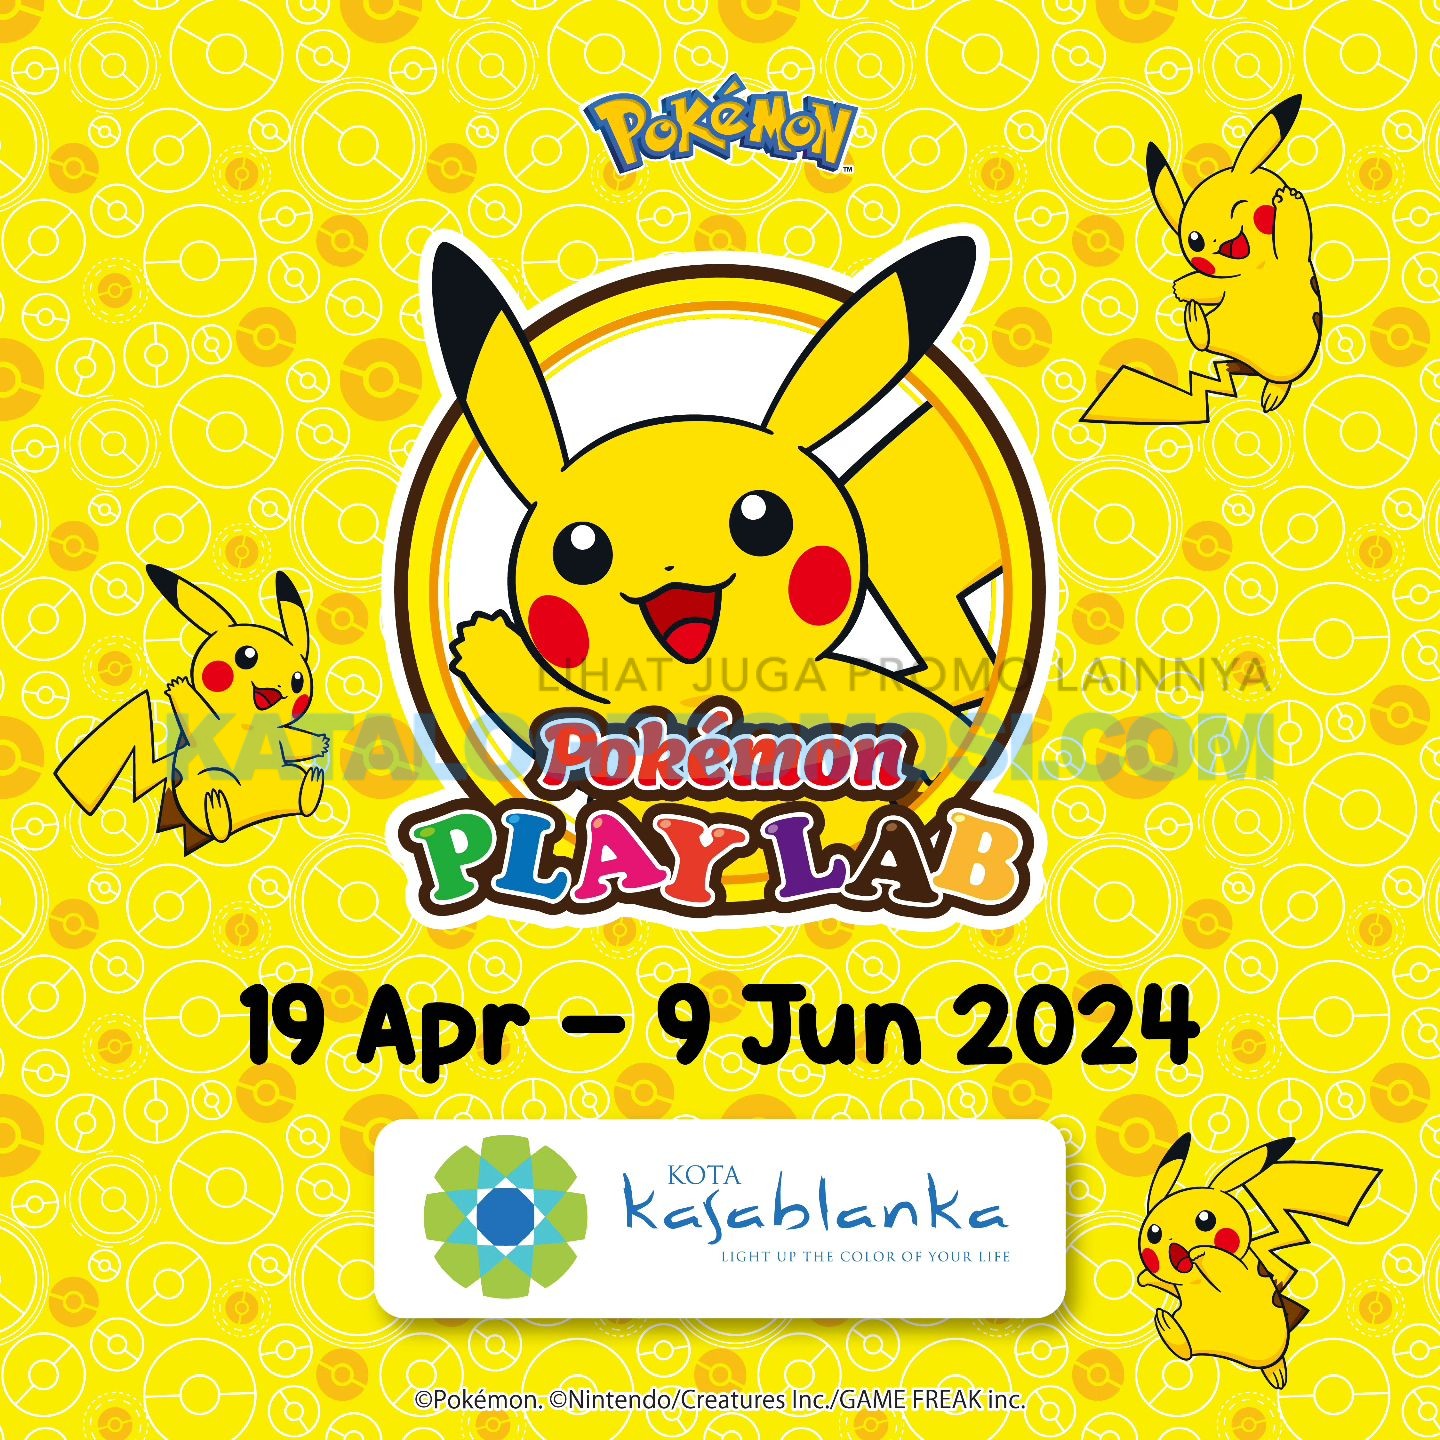 Pokémon PlayLab di KOTA KASABLANKA mulai tanggal 19 April - 9 Juni 2024!